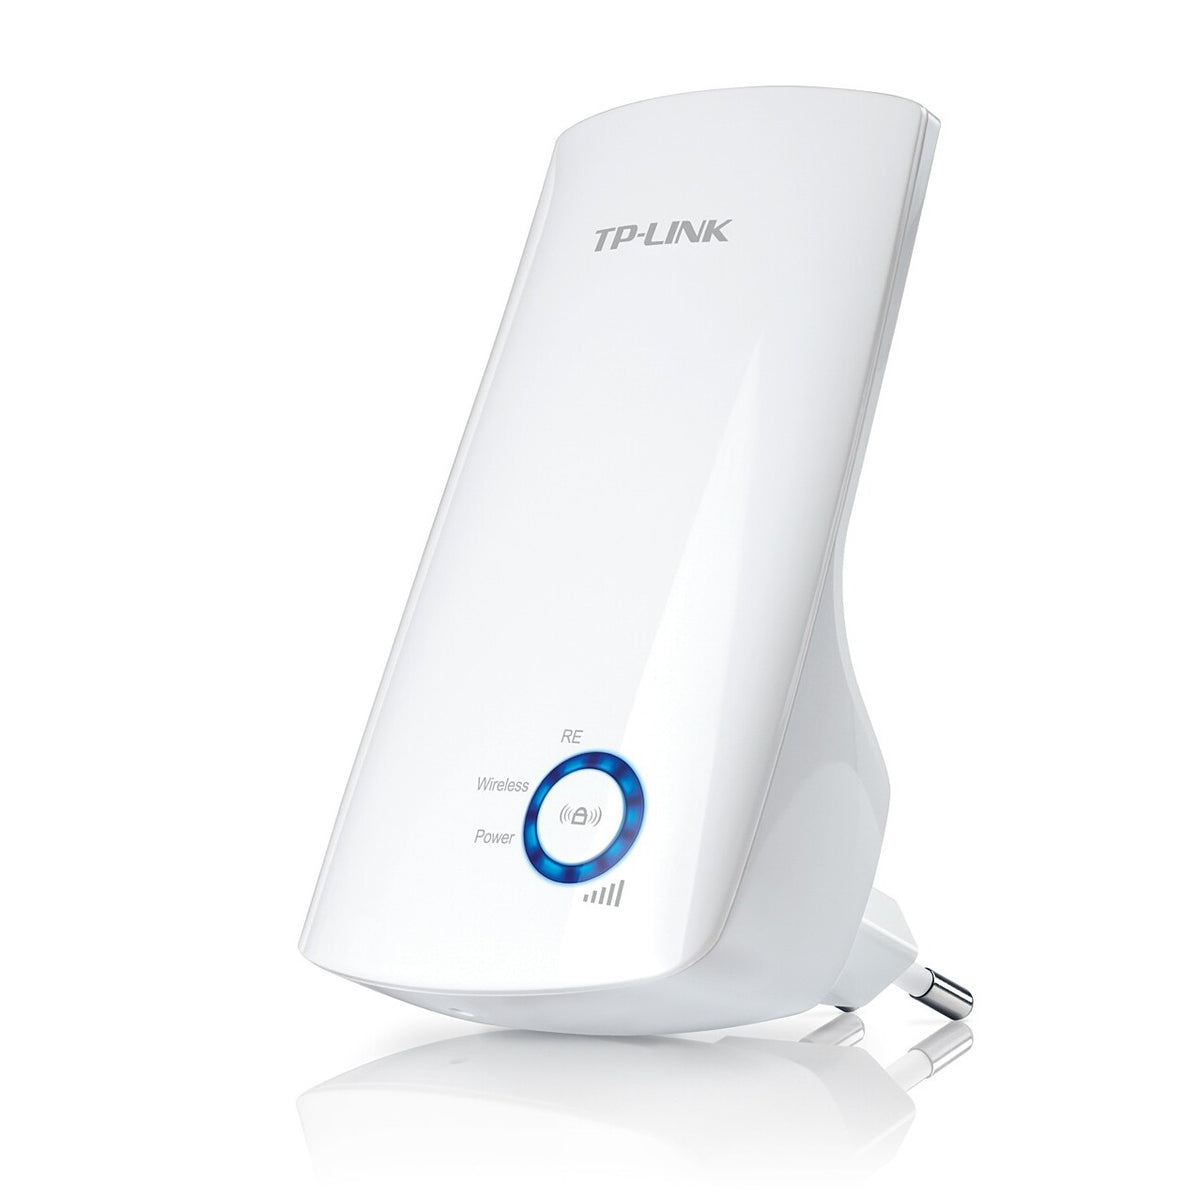 WiFi extender TP-Link TL-WA854RE, N300